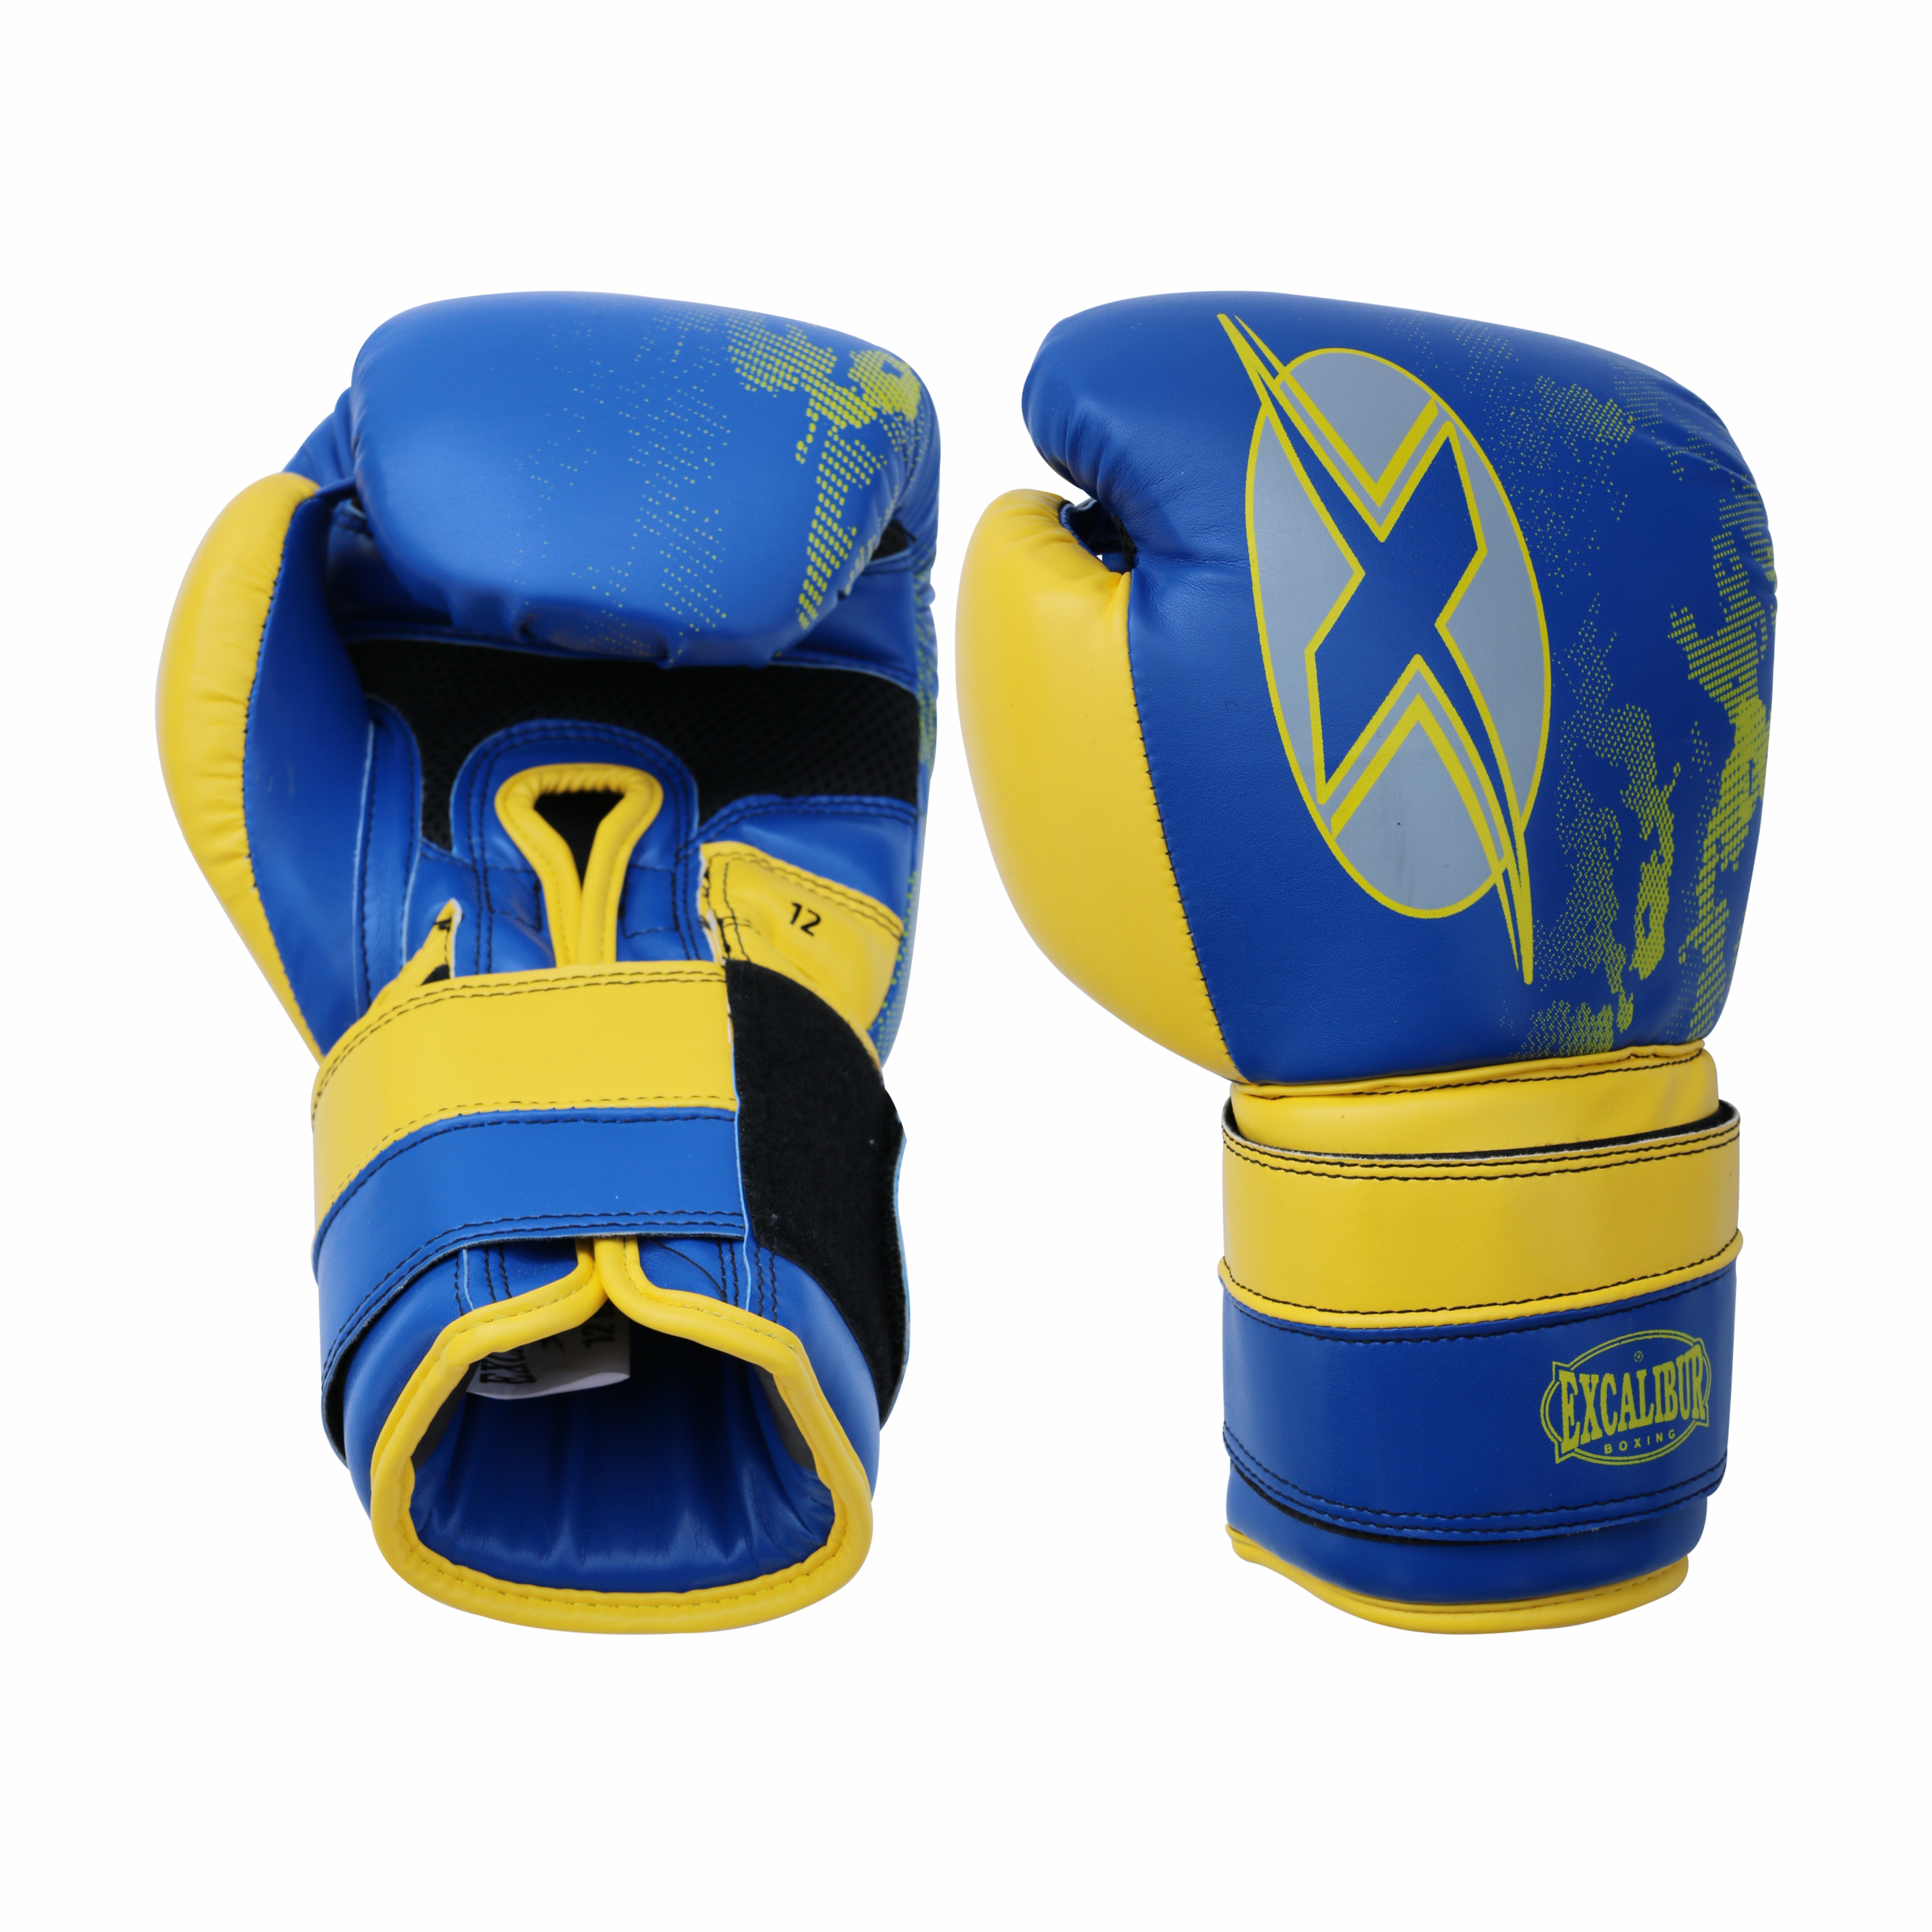 Tsunami Boxing Gloves